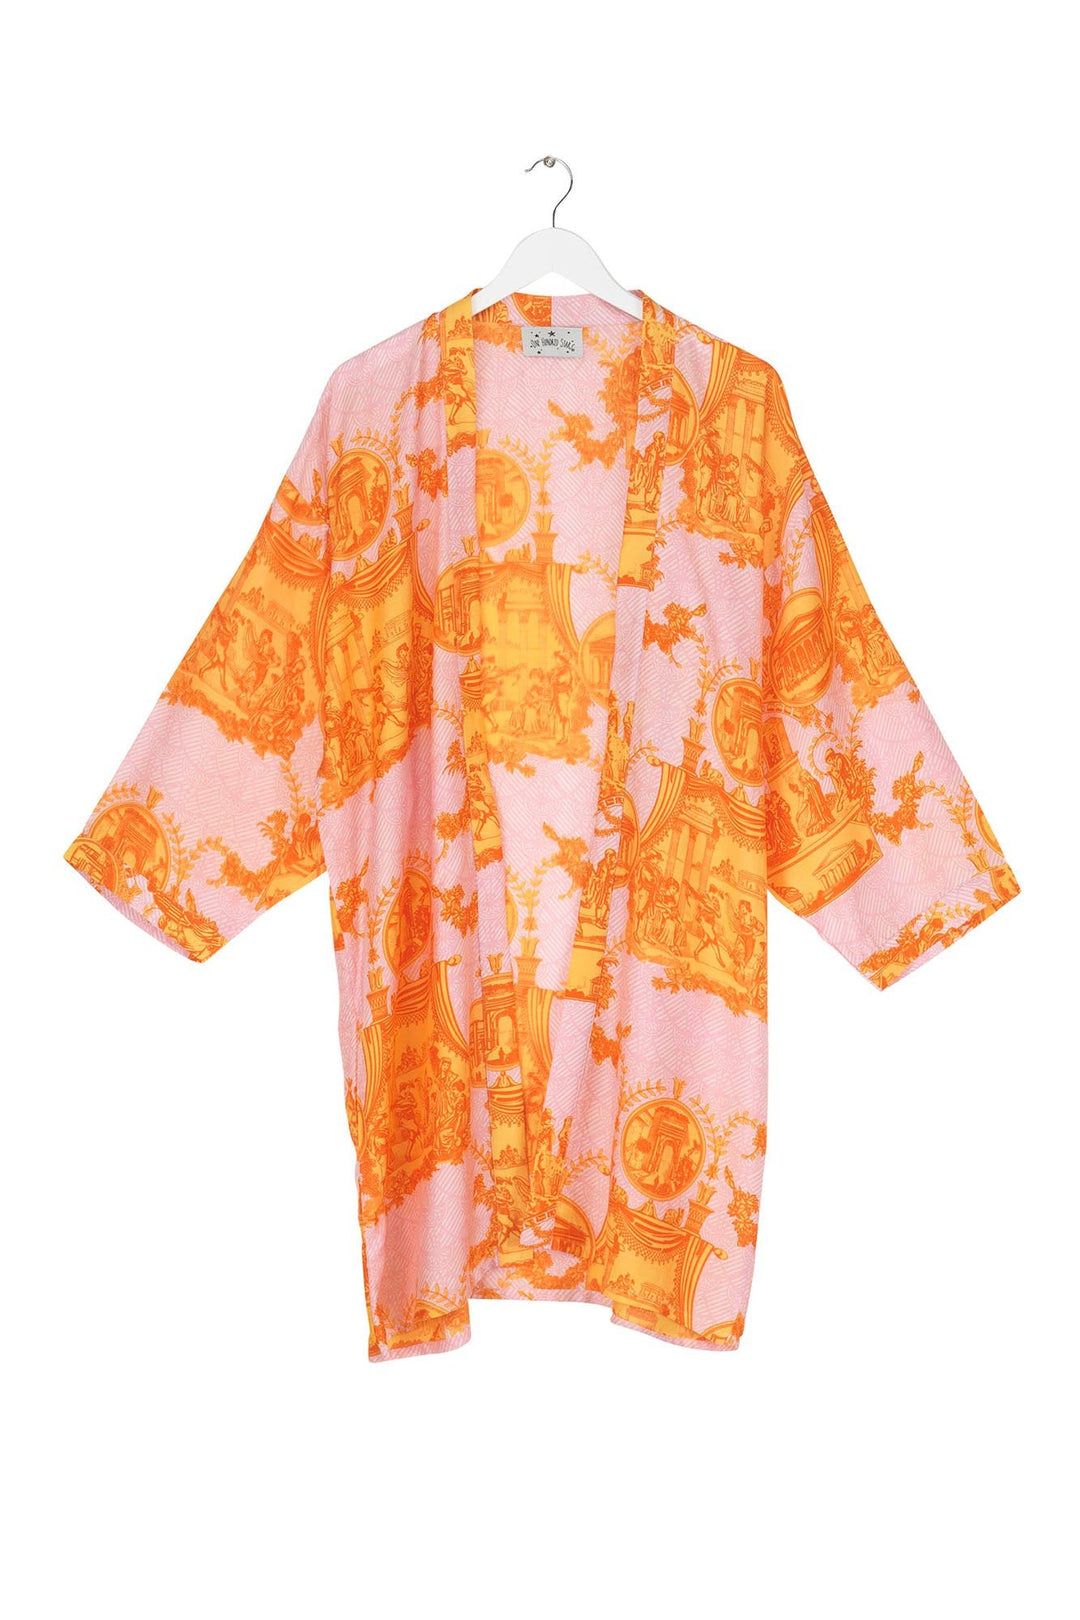 Ancient Columns Orange Collar Kimono - One Hundred Stars